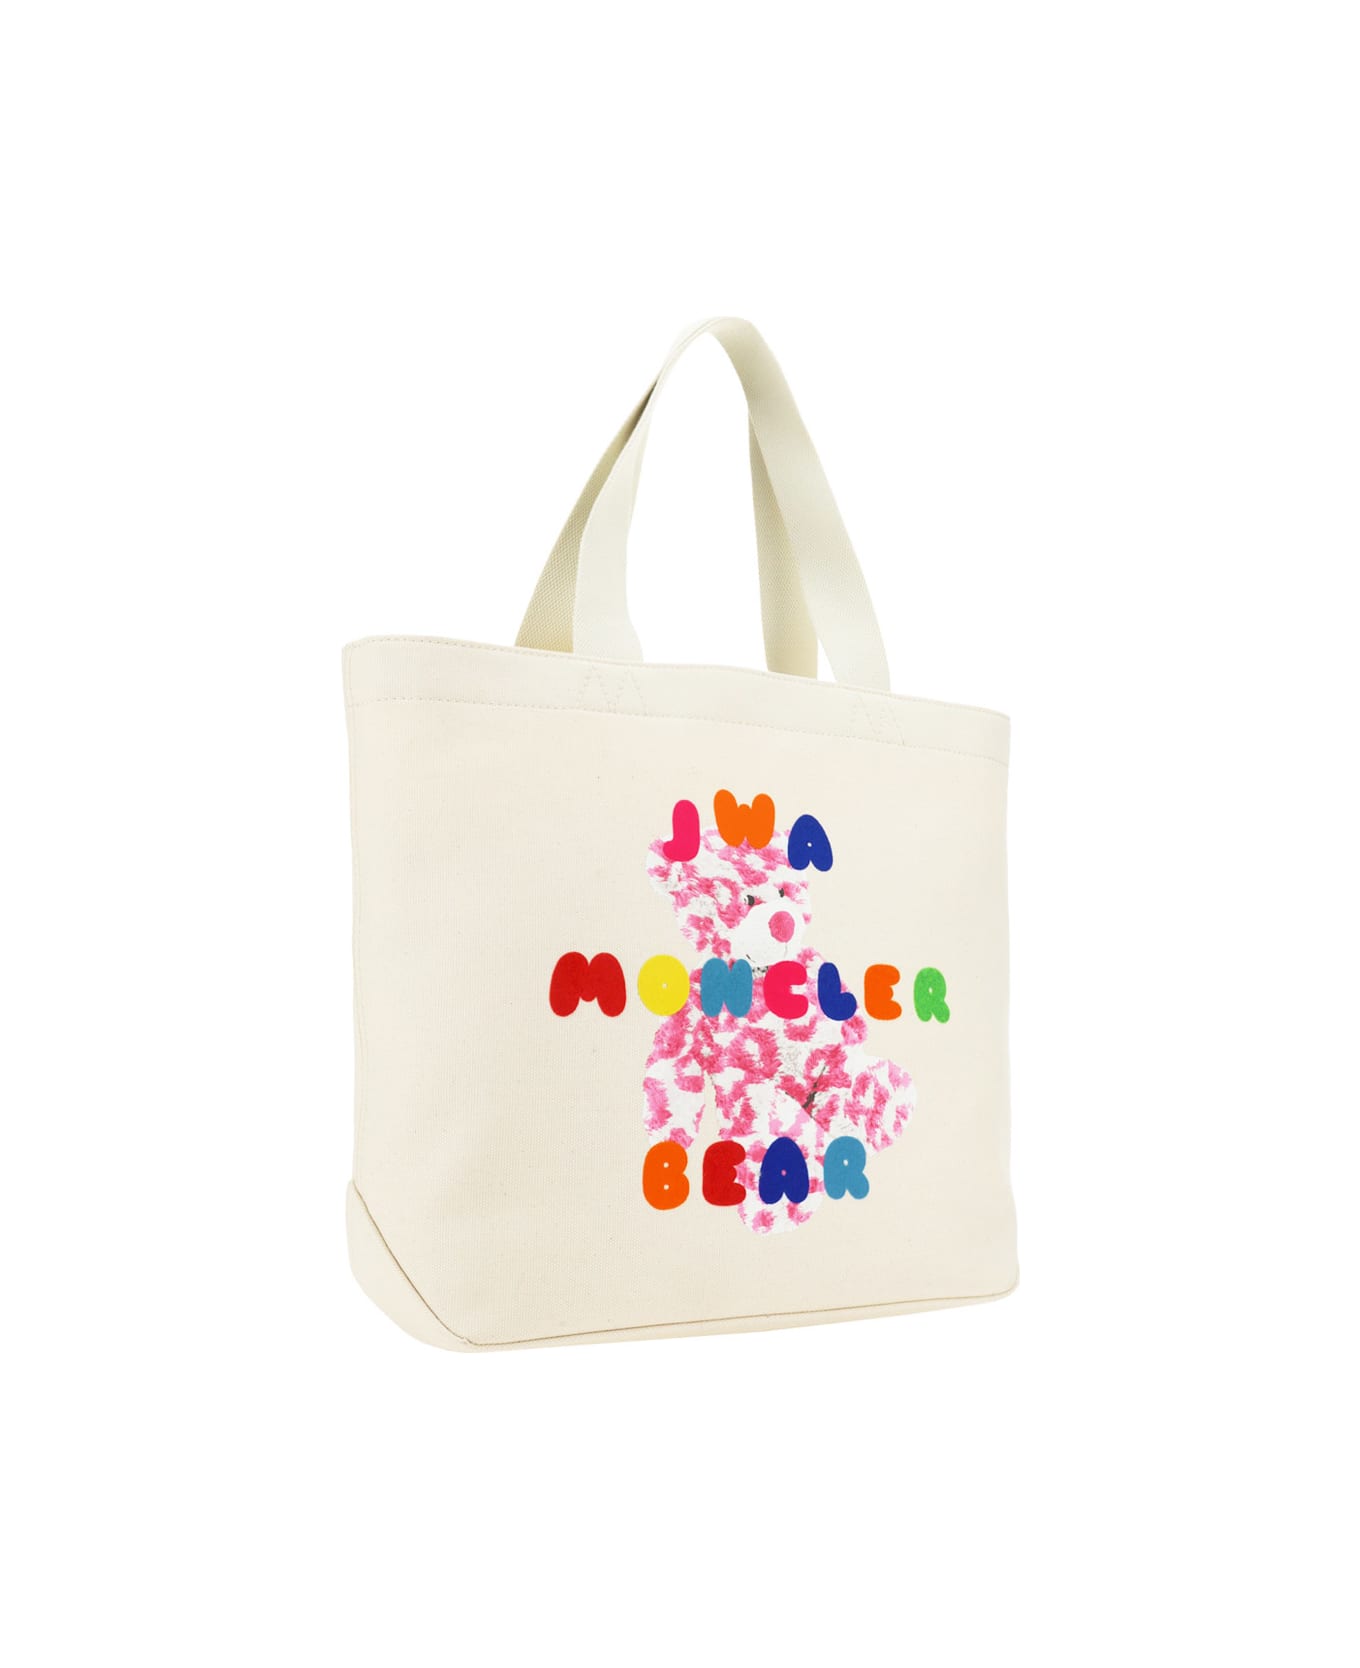 Moncler Genius X J.w.anderson Tote Bag - Bianco/multicolor